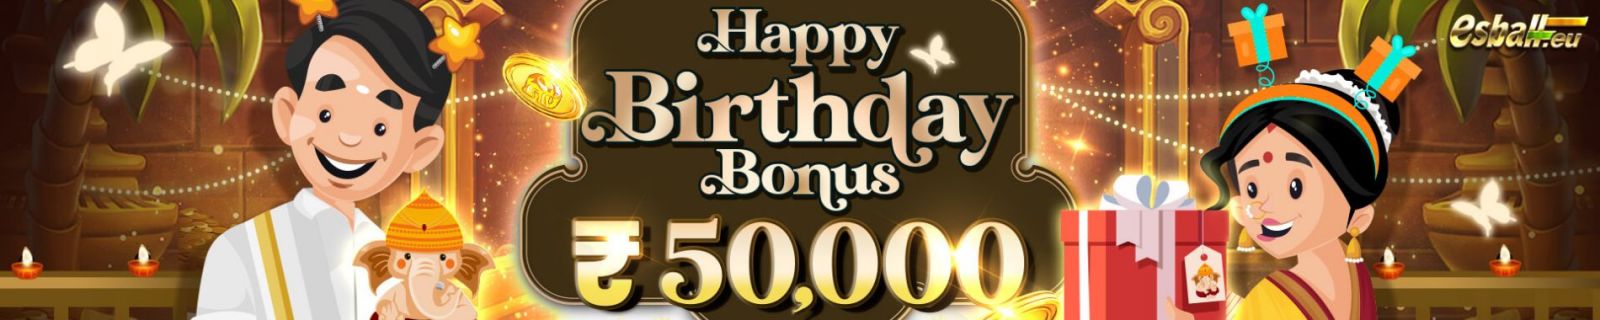 Esball Eu Birthday Bonus Casino Up to ₹50,000